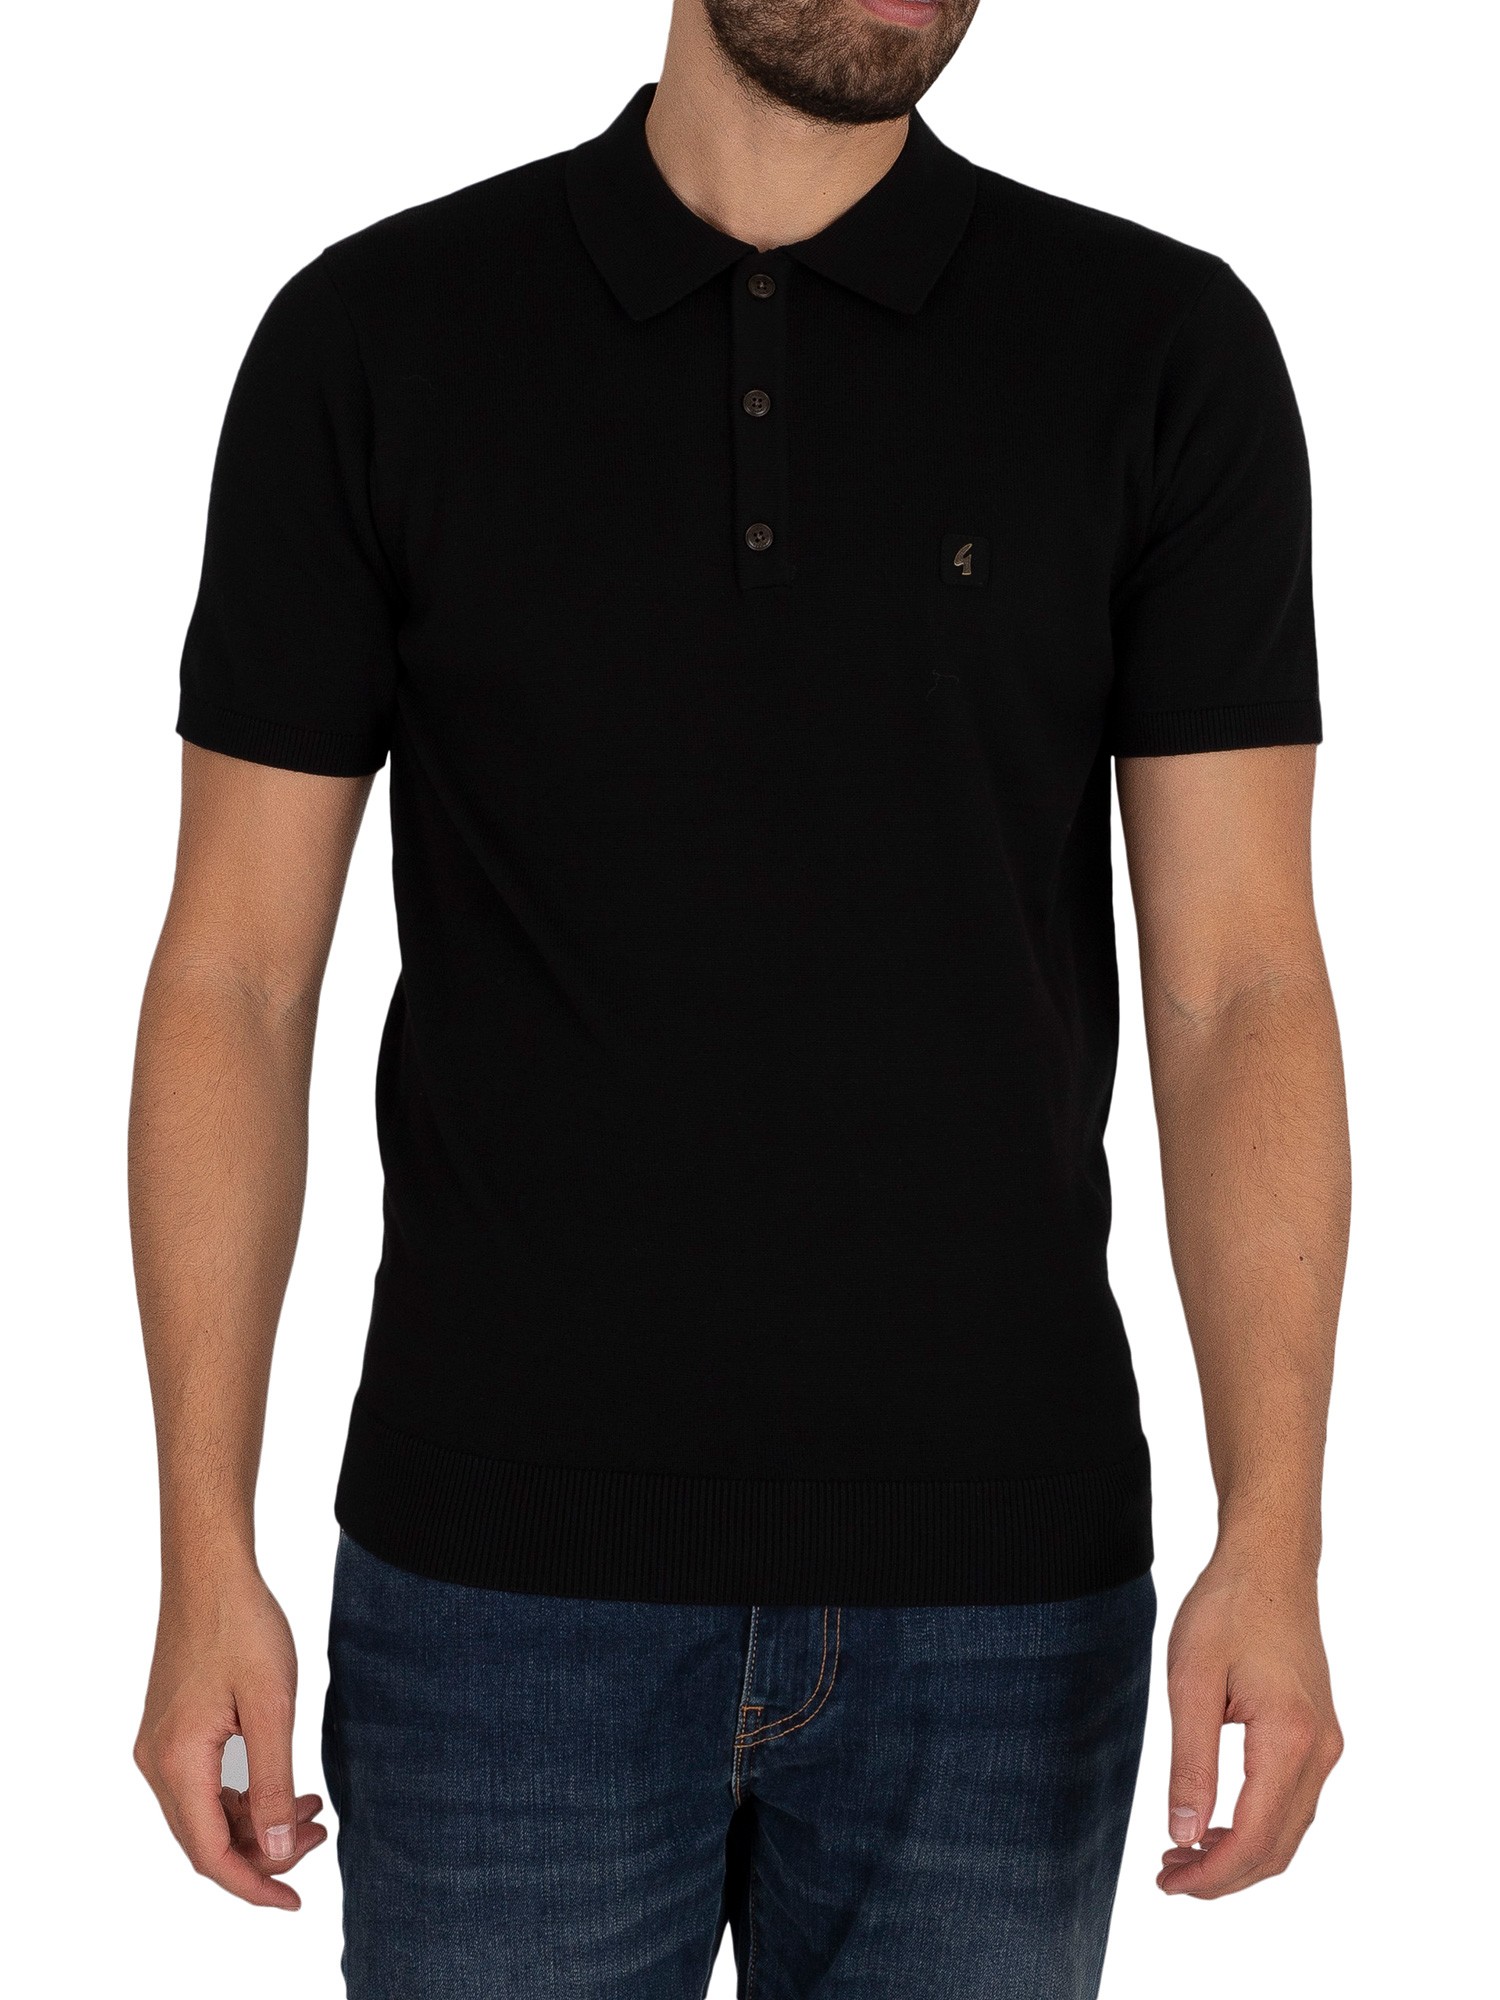 Gabicci Jackson Three Button Knitted Polo Shirt - Black | Standout